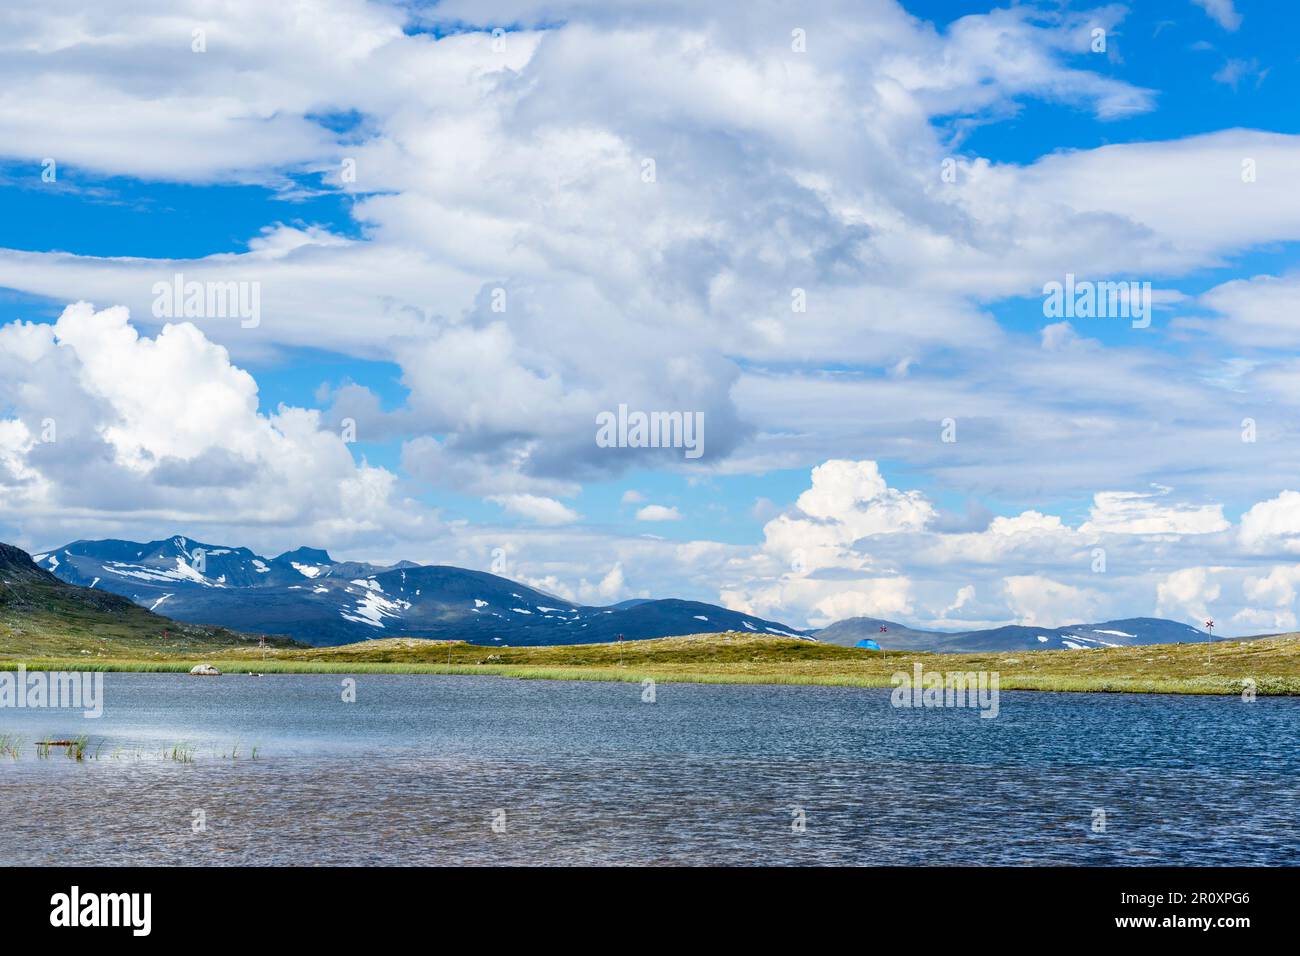 Mountain lake in the Swedish mountains Stock Photo